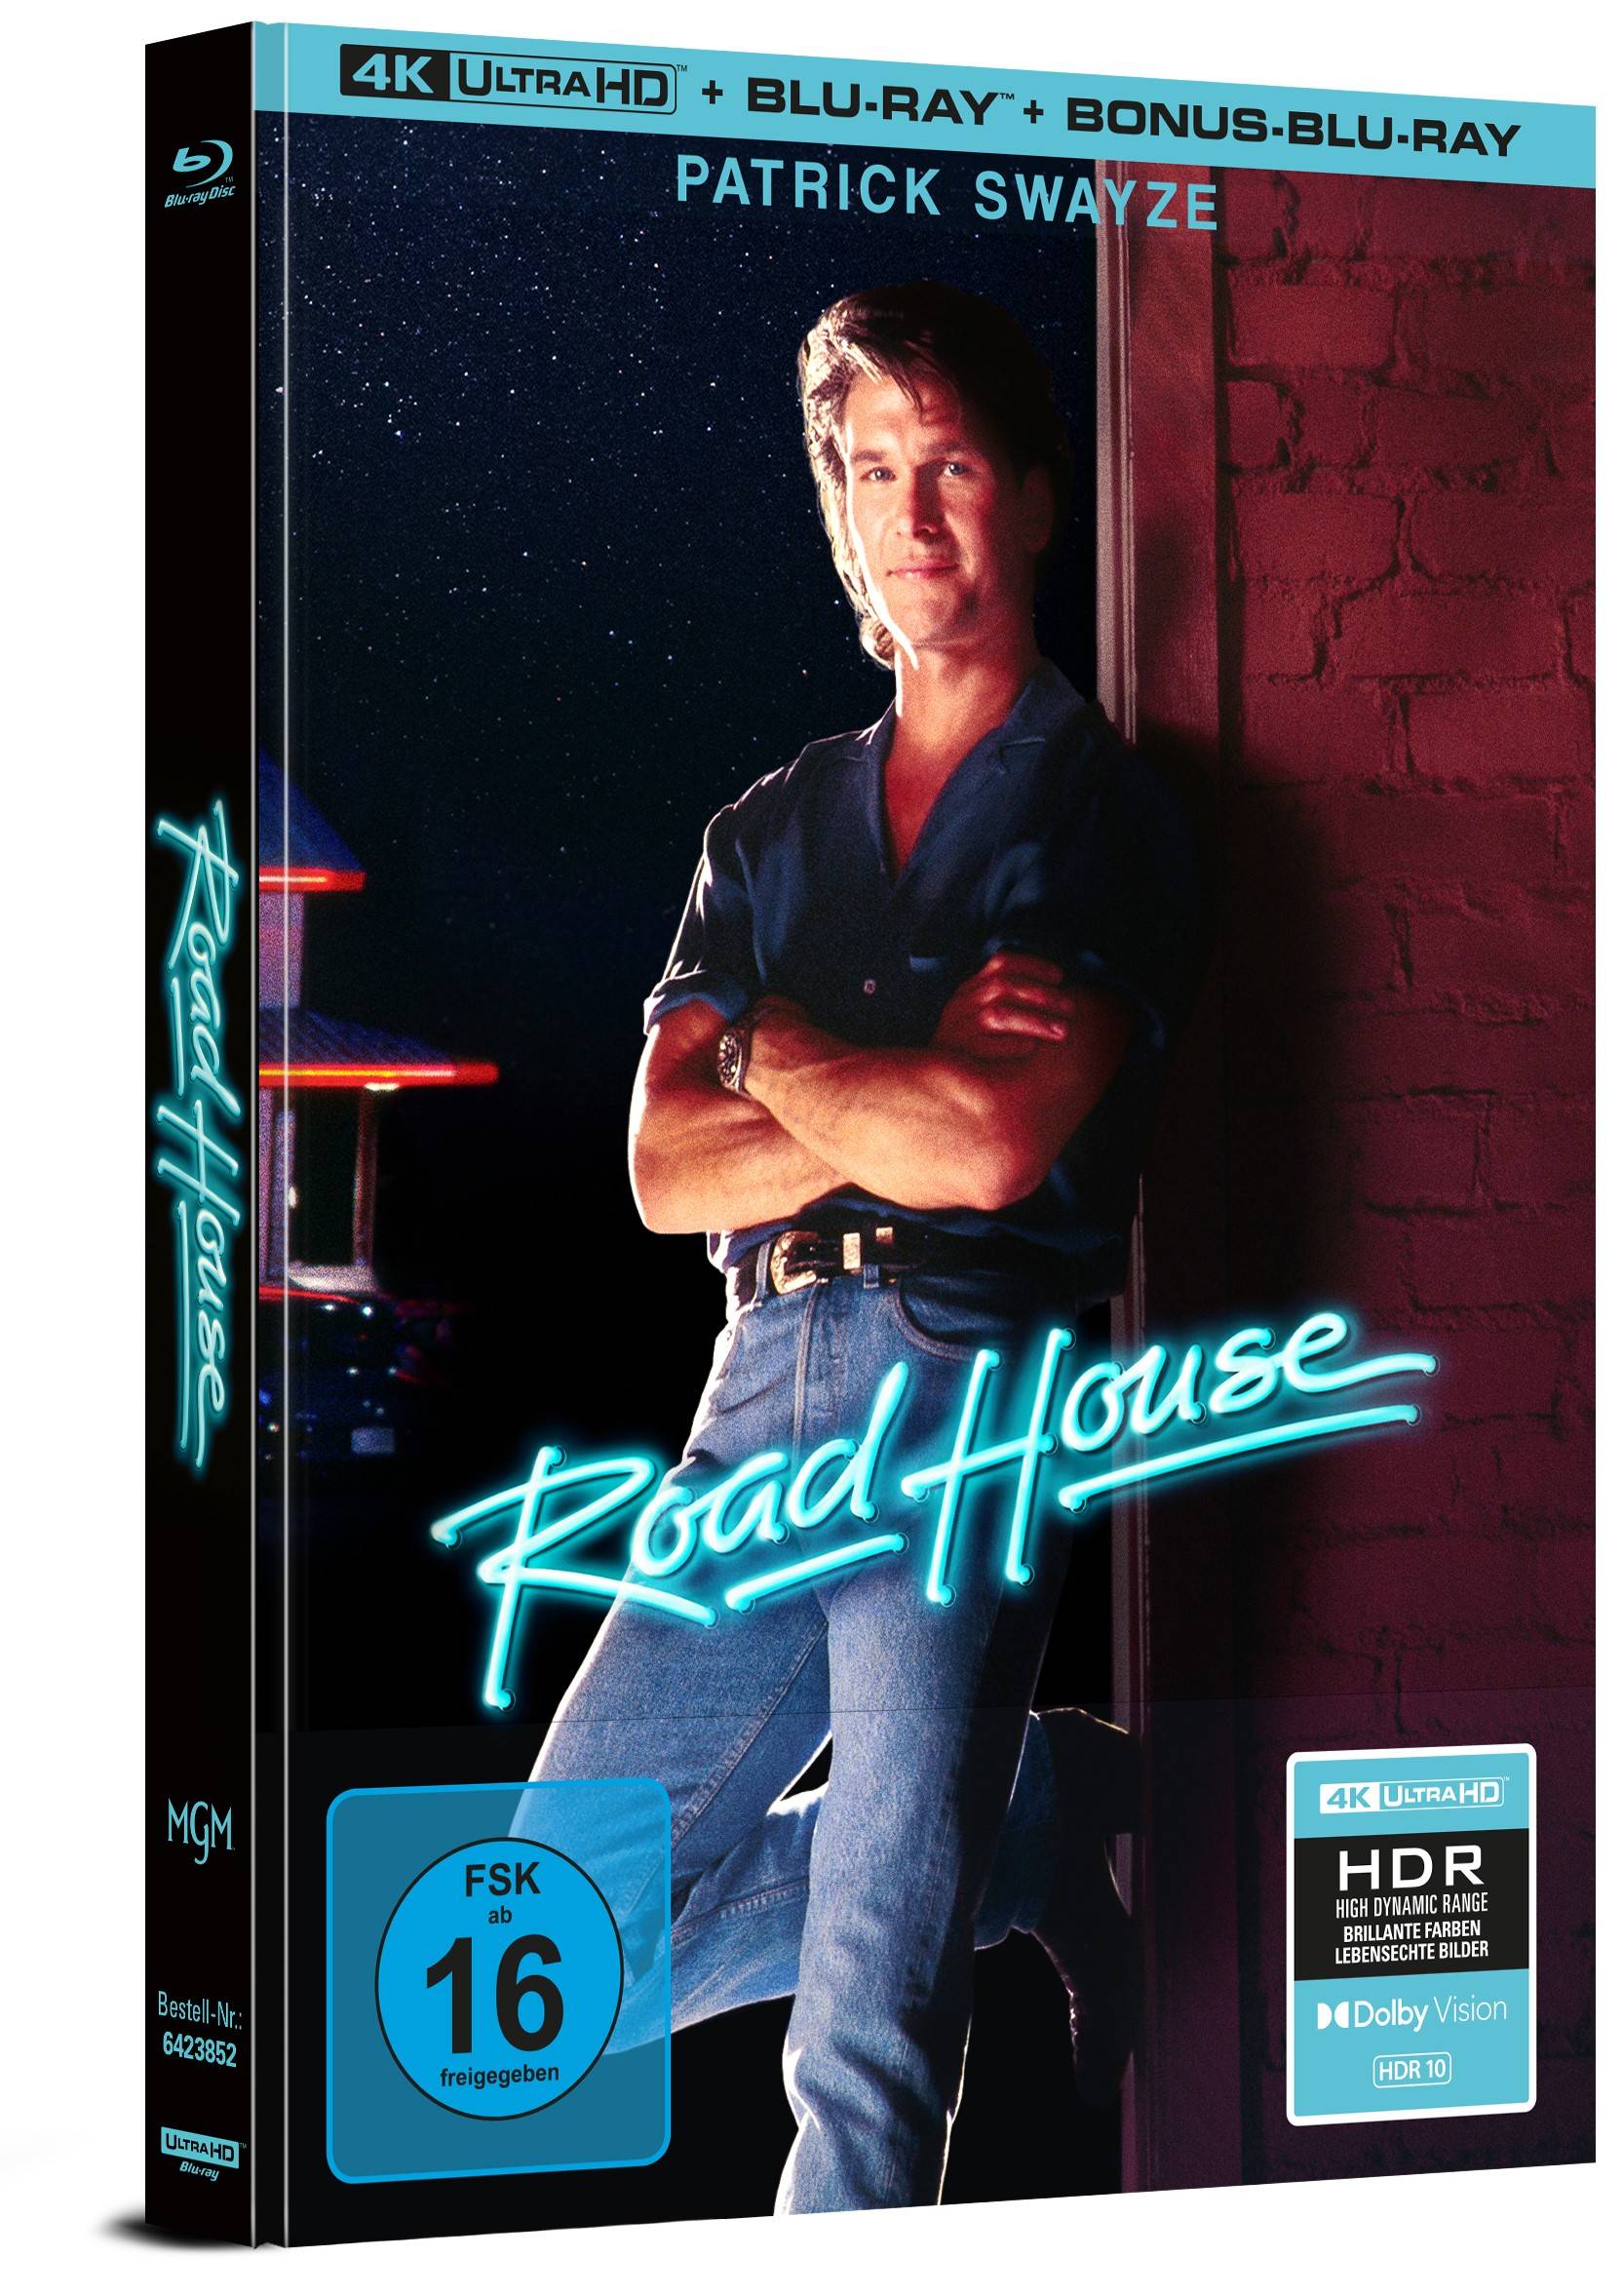 Road House - 3-Disc Limited Collector's Edition im Mediabook (UHD-Blu-ray + Blu-ray + Bonus-Blu-ray)